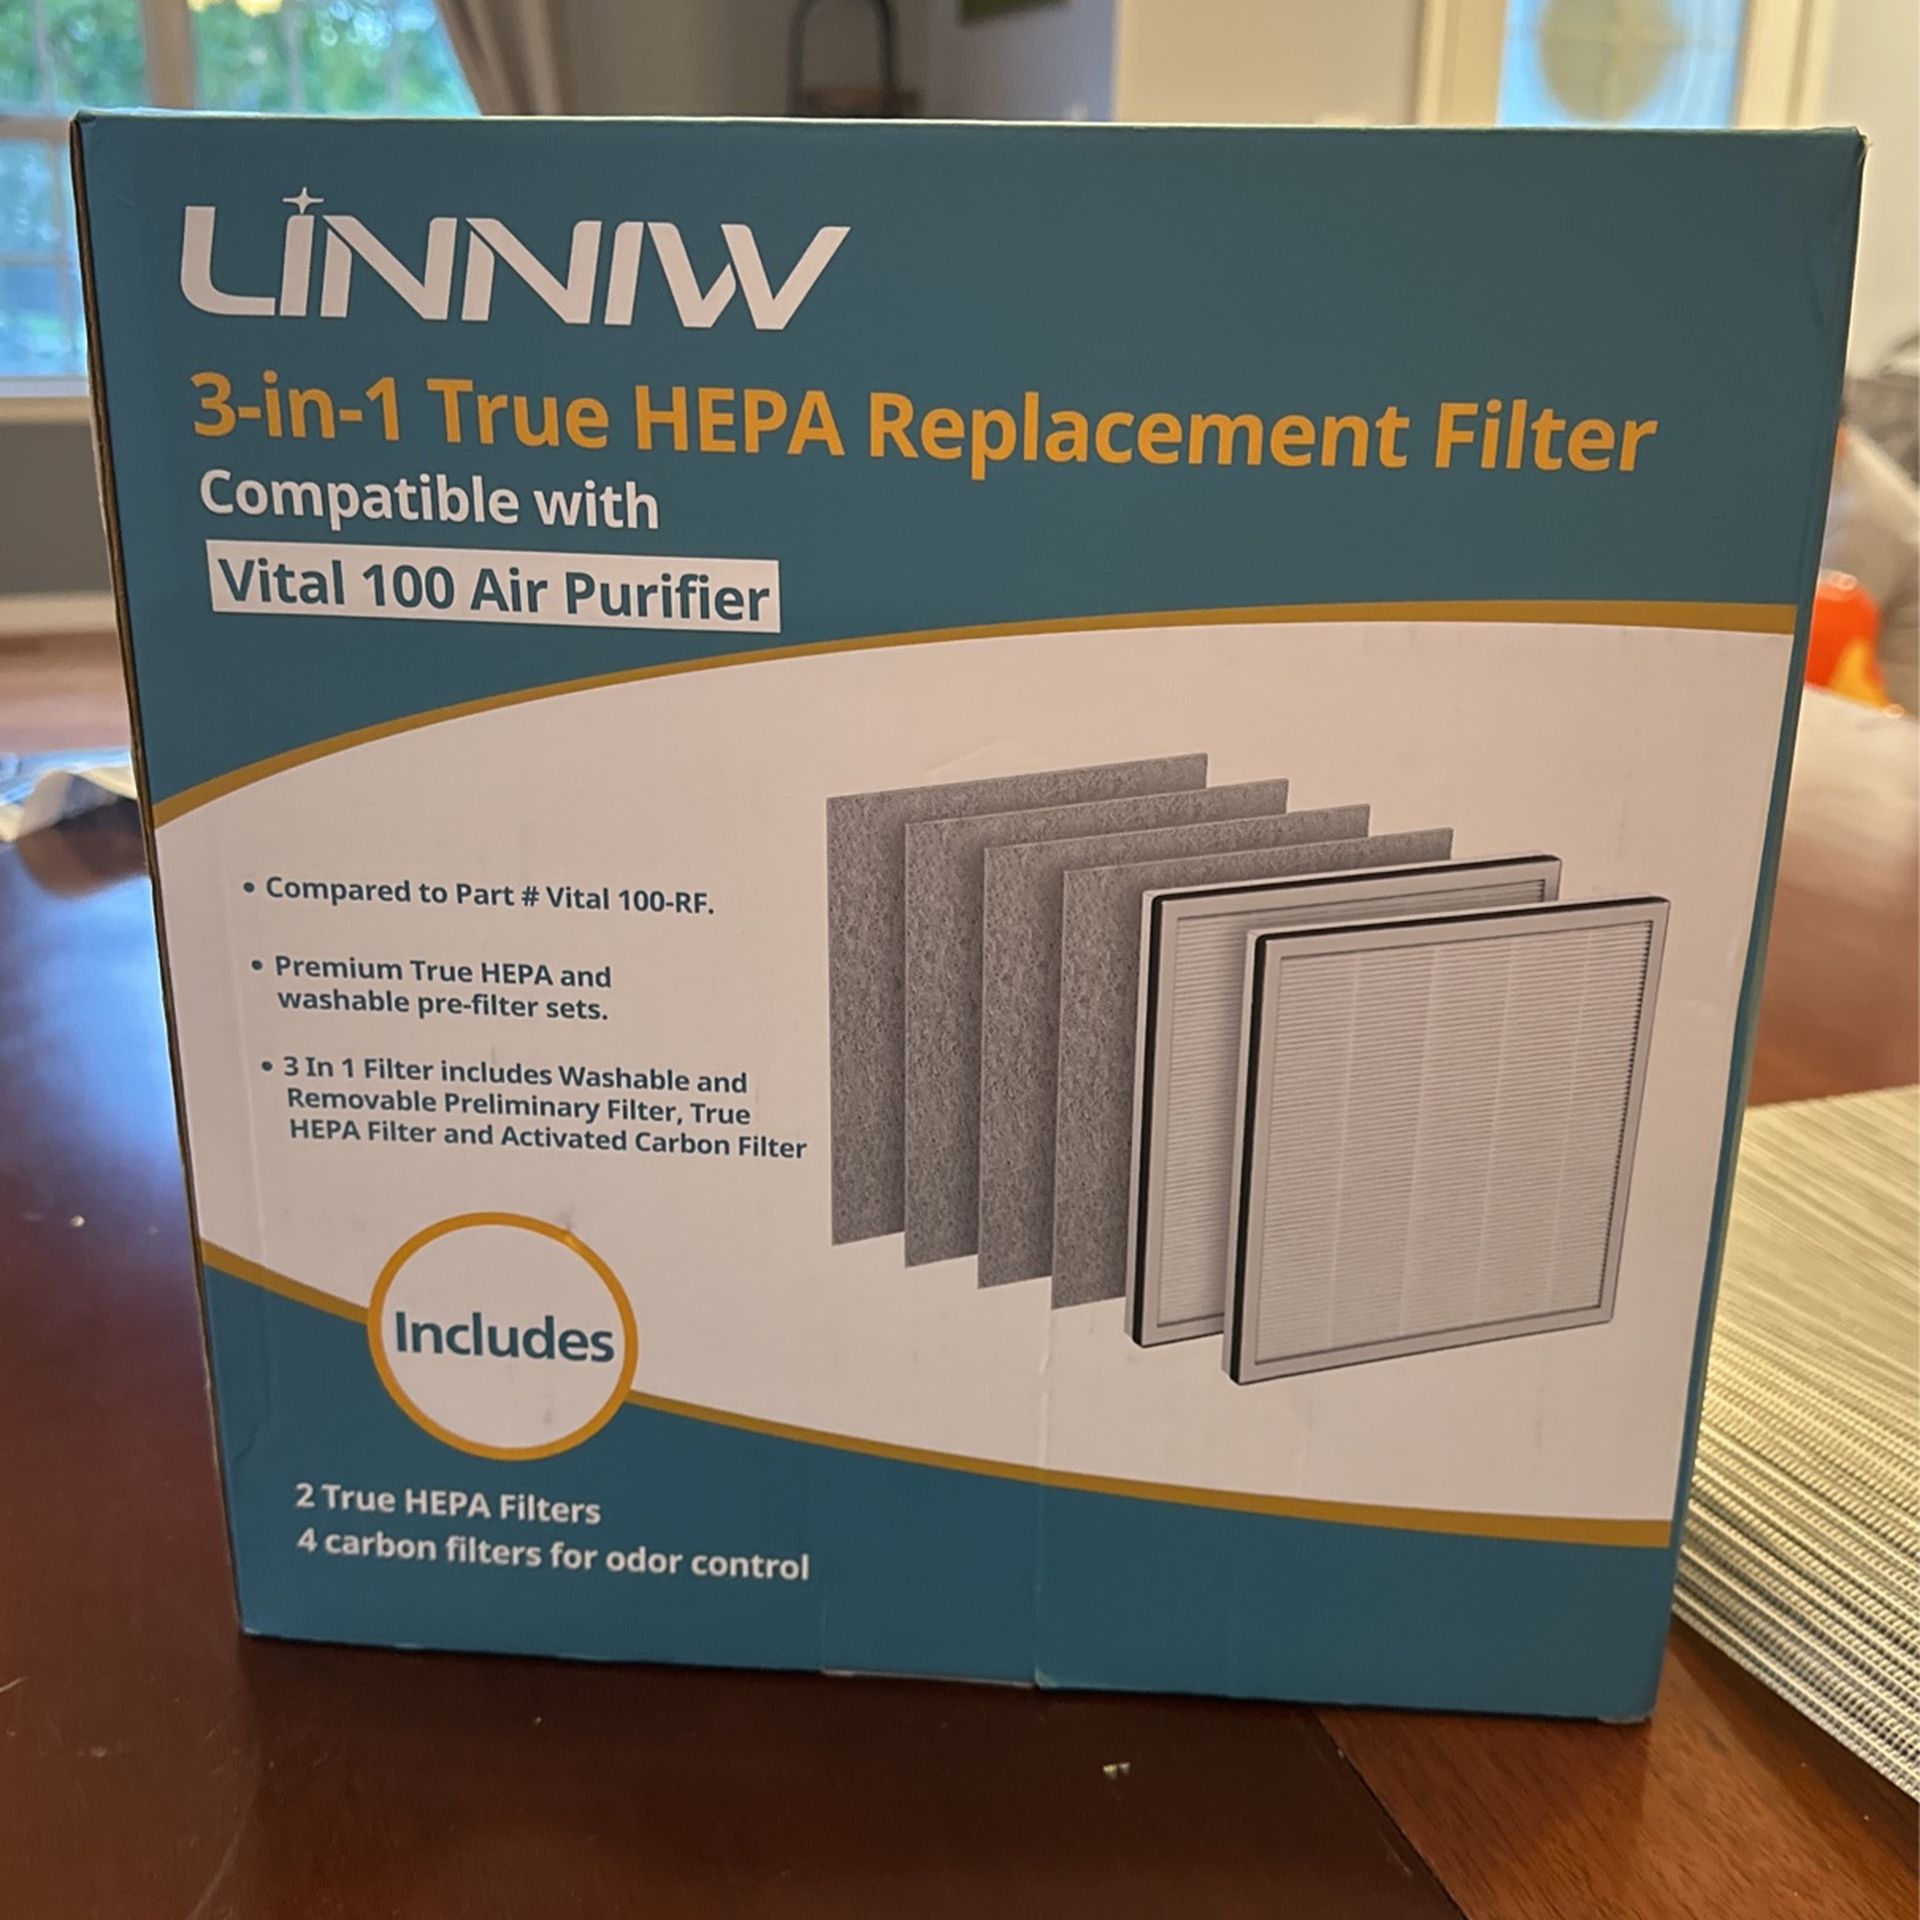 HEPA Air Filters